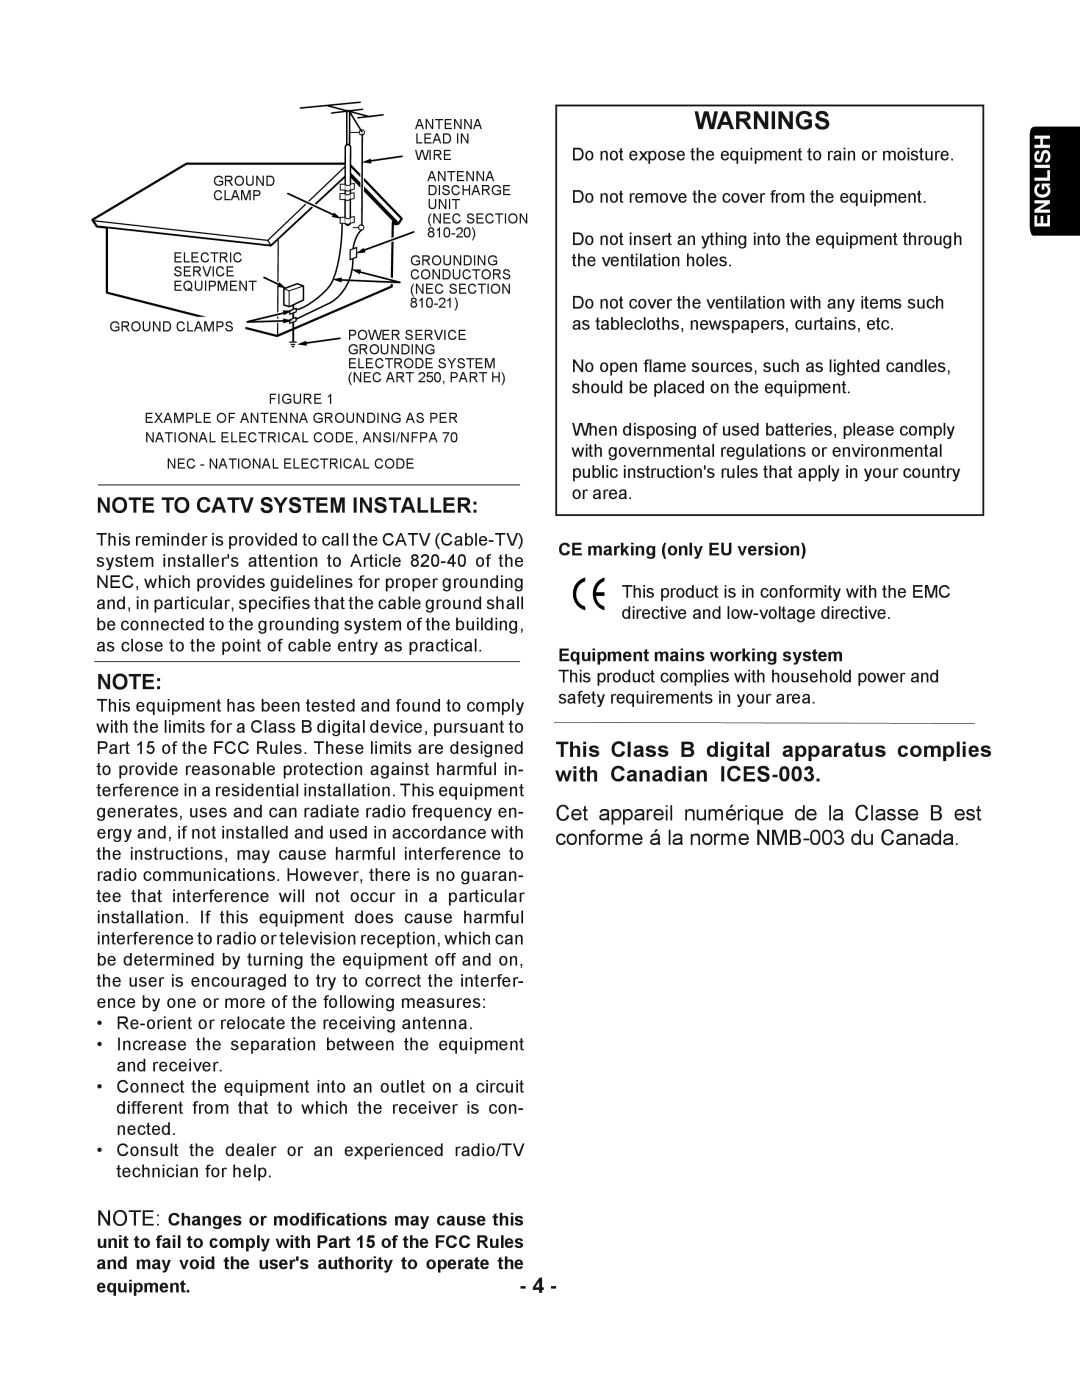 Marantz PMD351 manual Note To Catv System Installer, English 